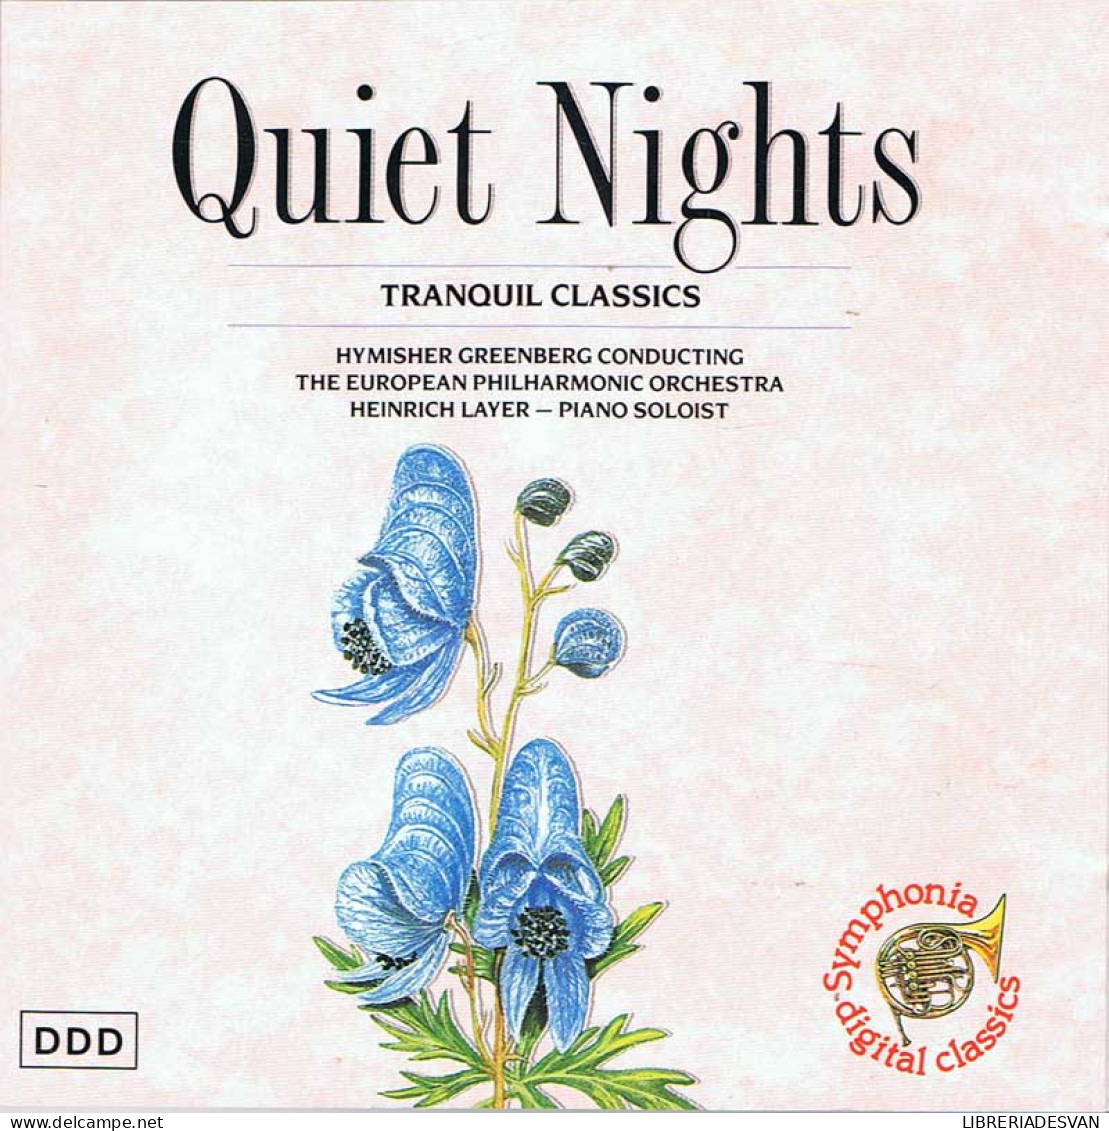 Quiet Nights - Tranquil Classics. CD - Klassik